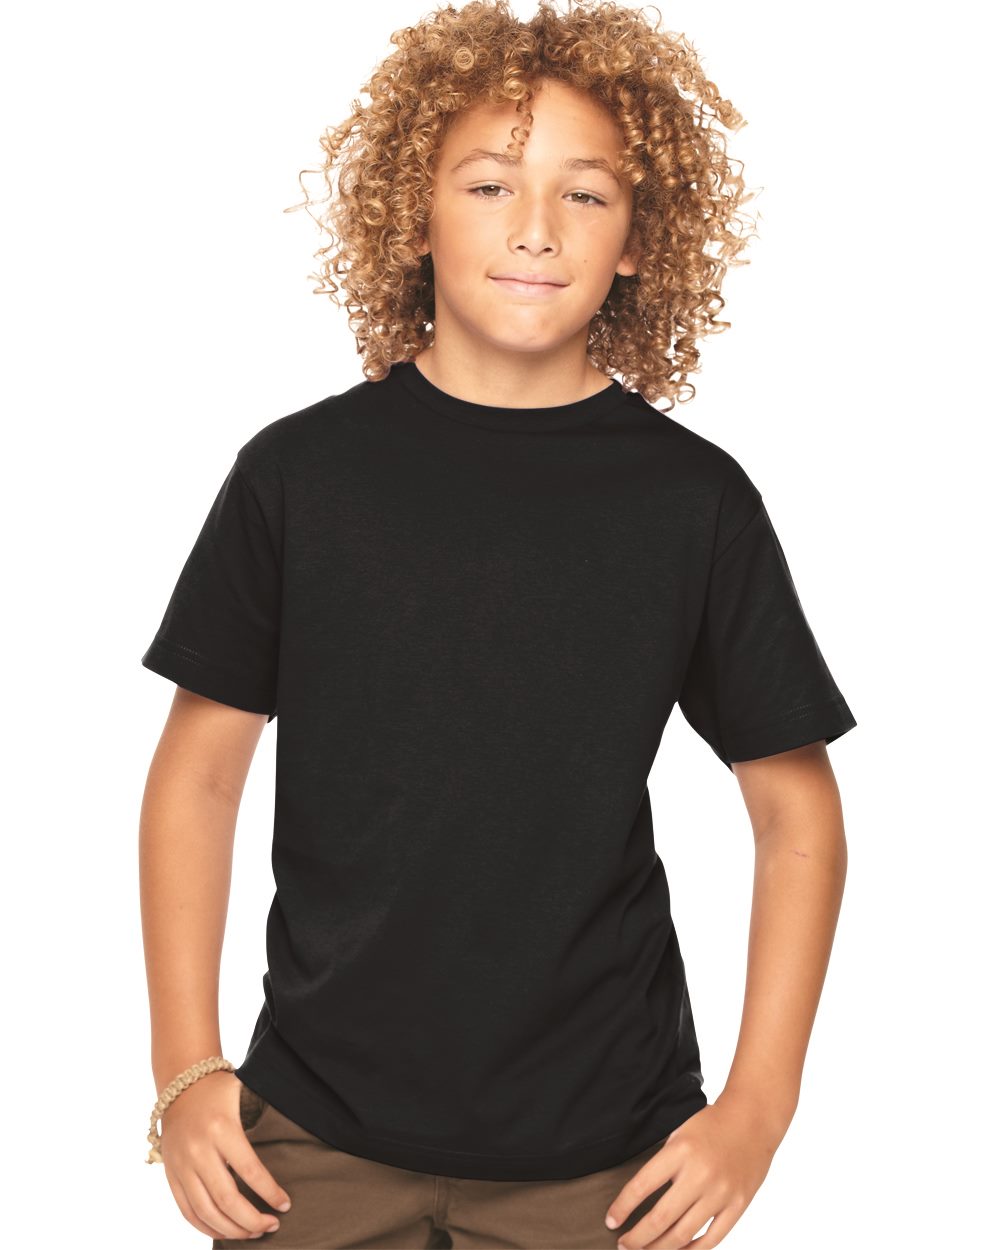 LAT Youth Fine Jersey T-shirt 6101 - Model Image